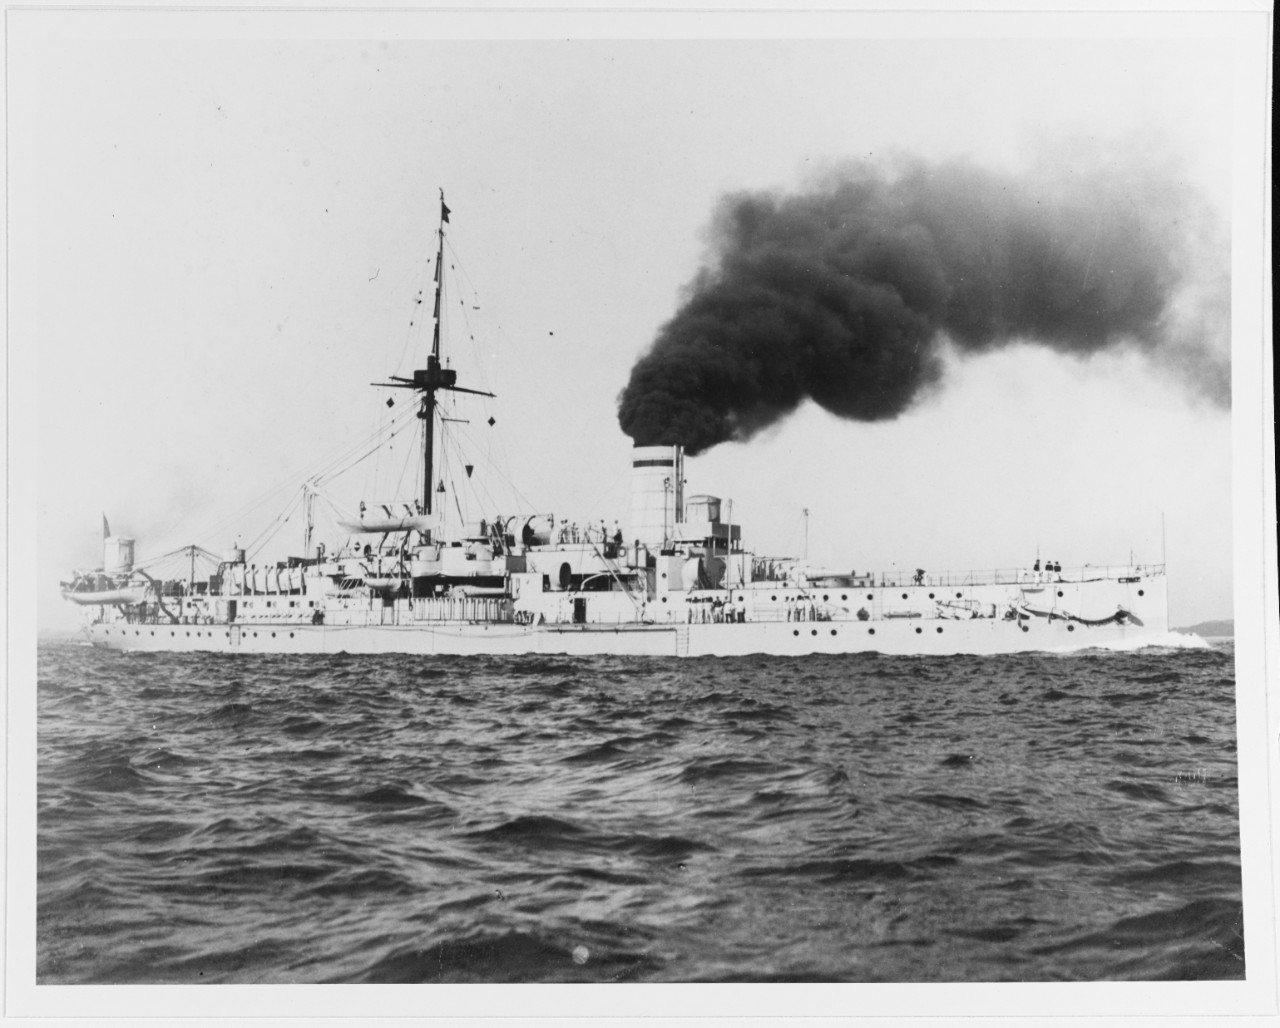 BADEN (German battleship, 1880-1910)